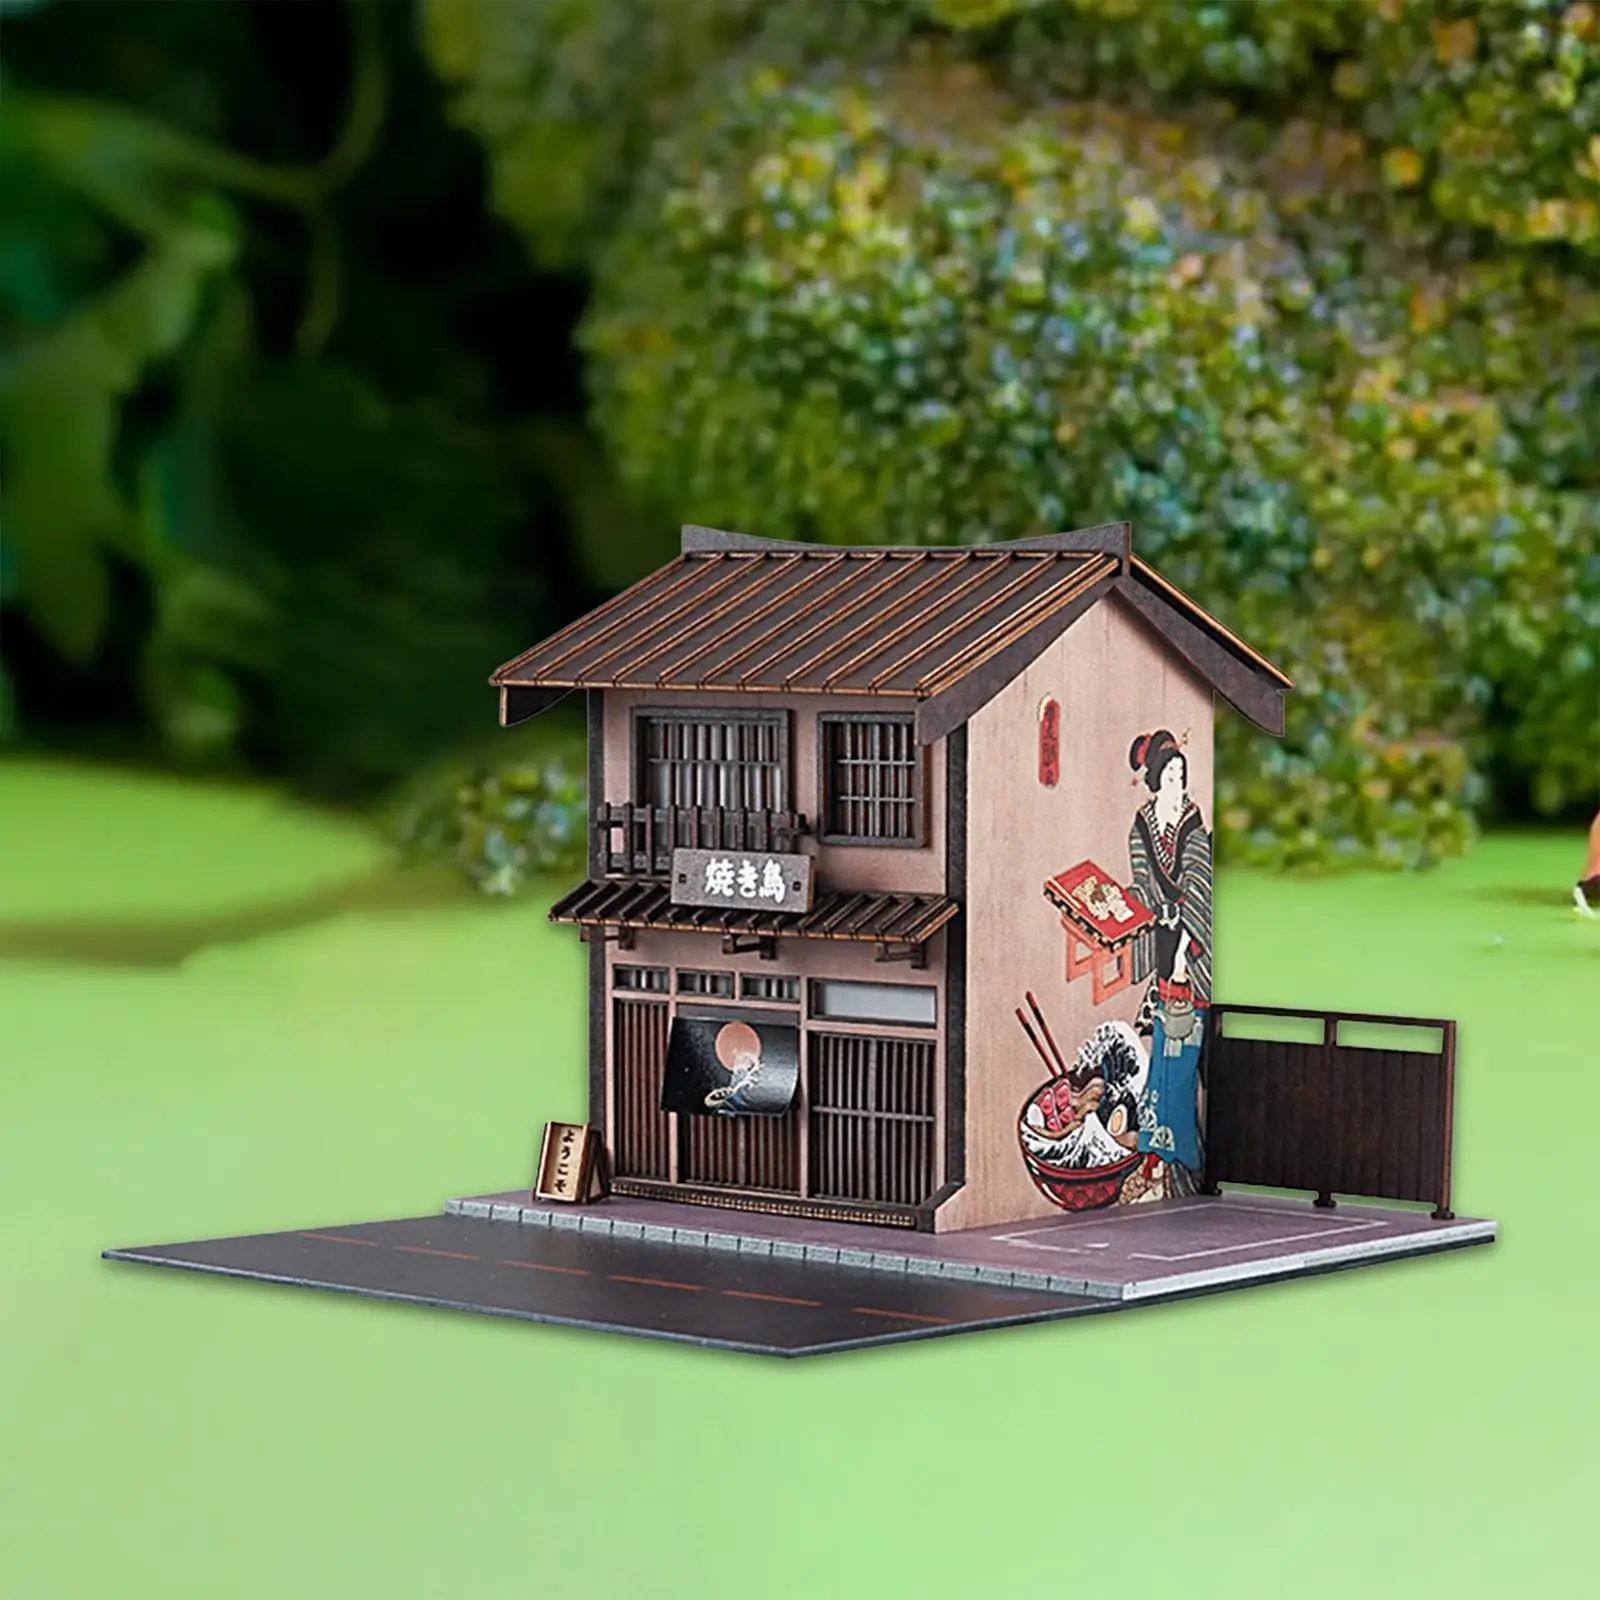 1/64 Shop Model Diorama Making Kits DIY for Micro Landscape Street Building